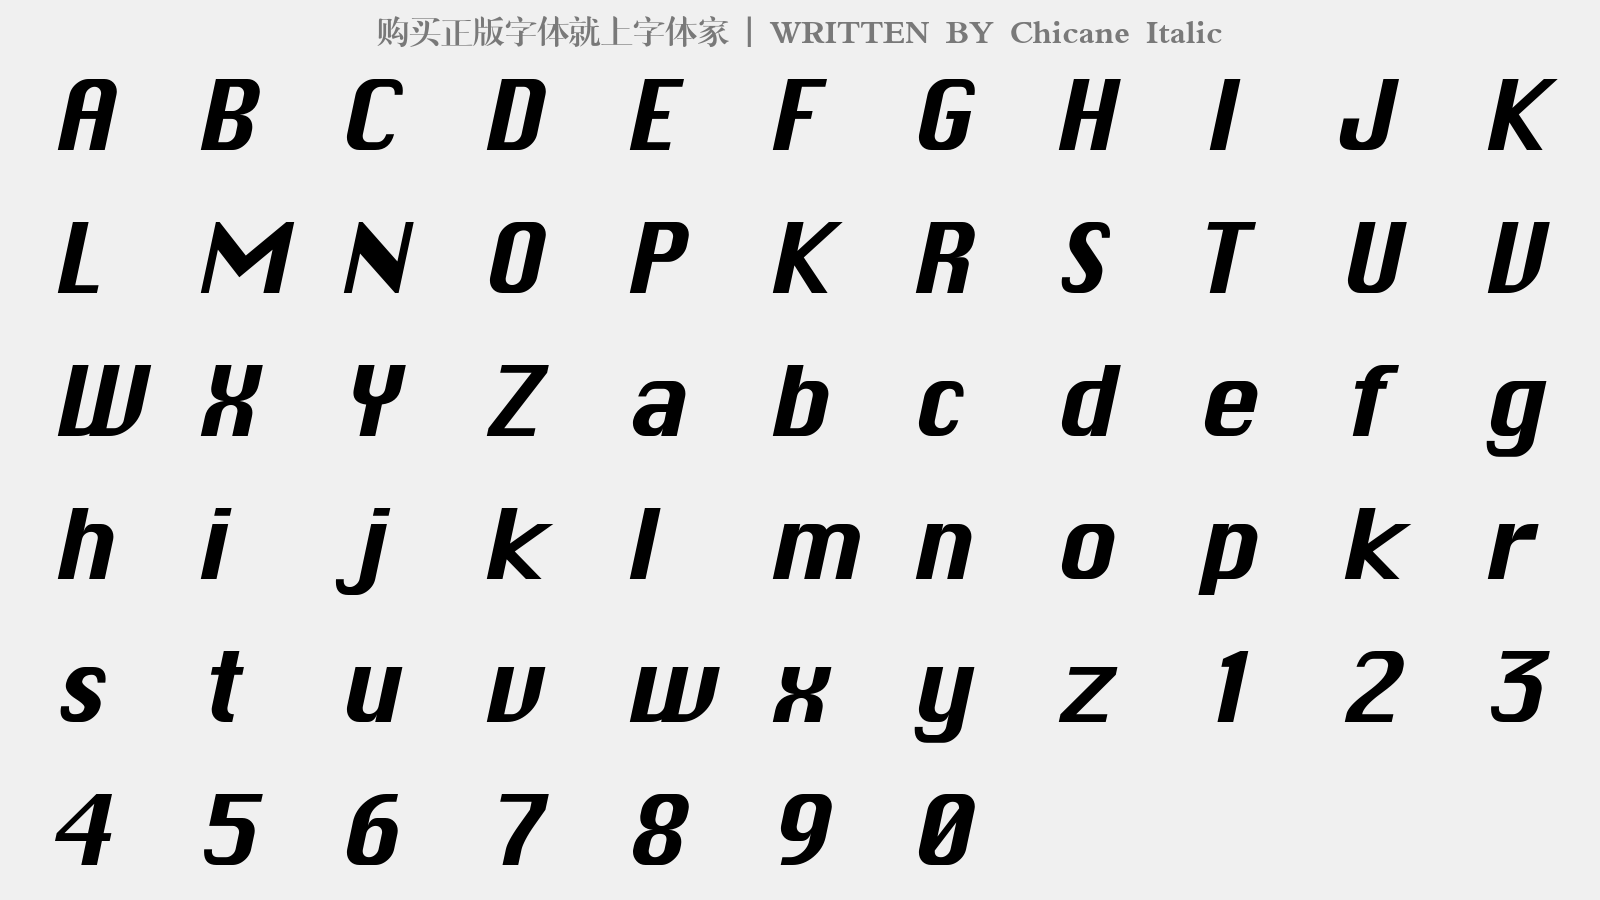 Chicane Italic - 大写字母/小写字母/数字